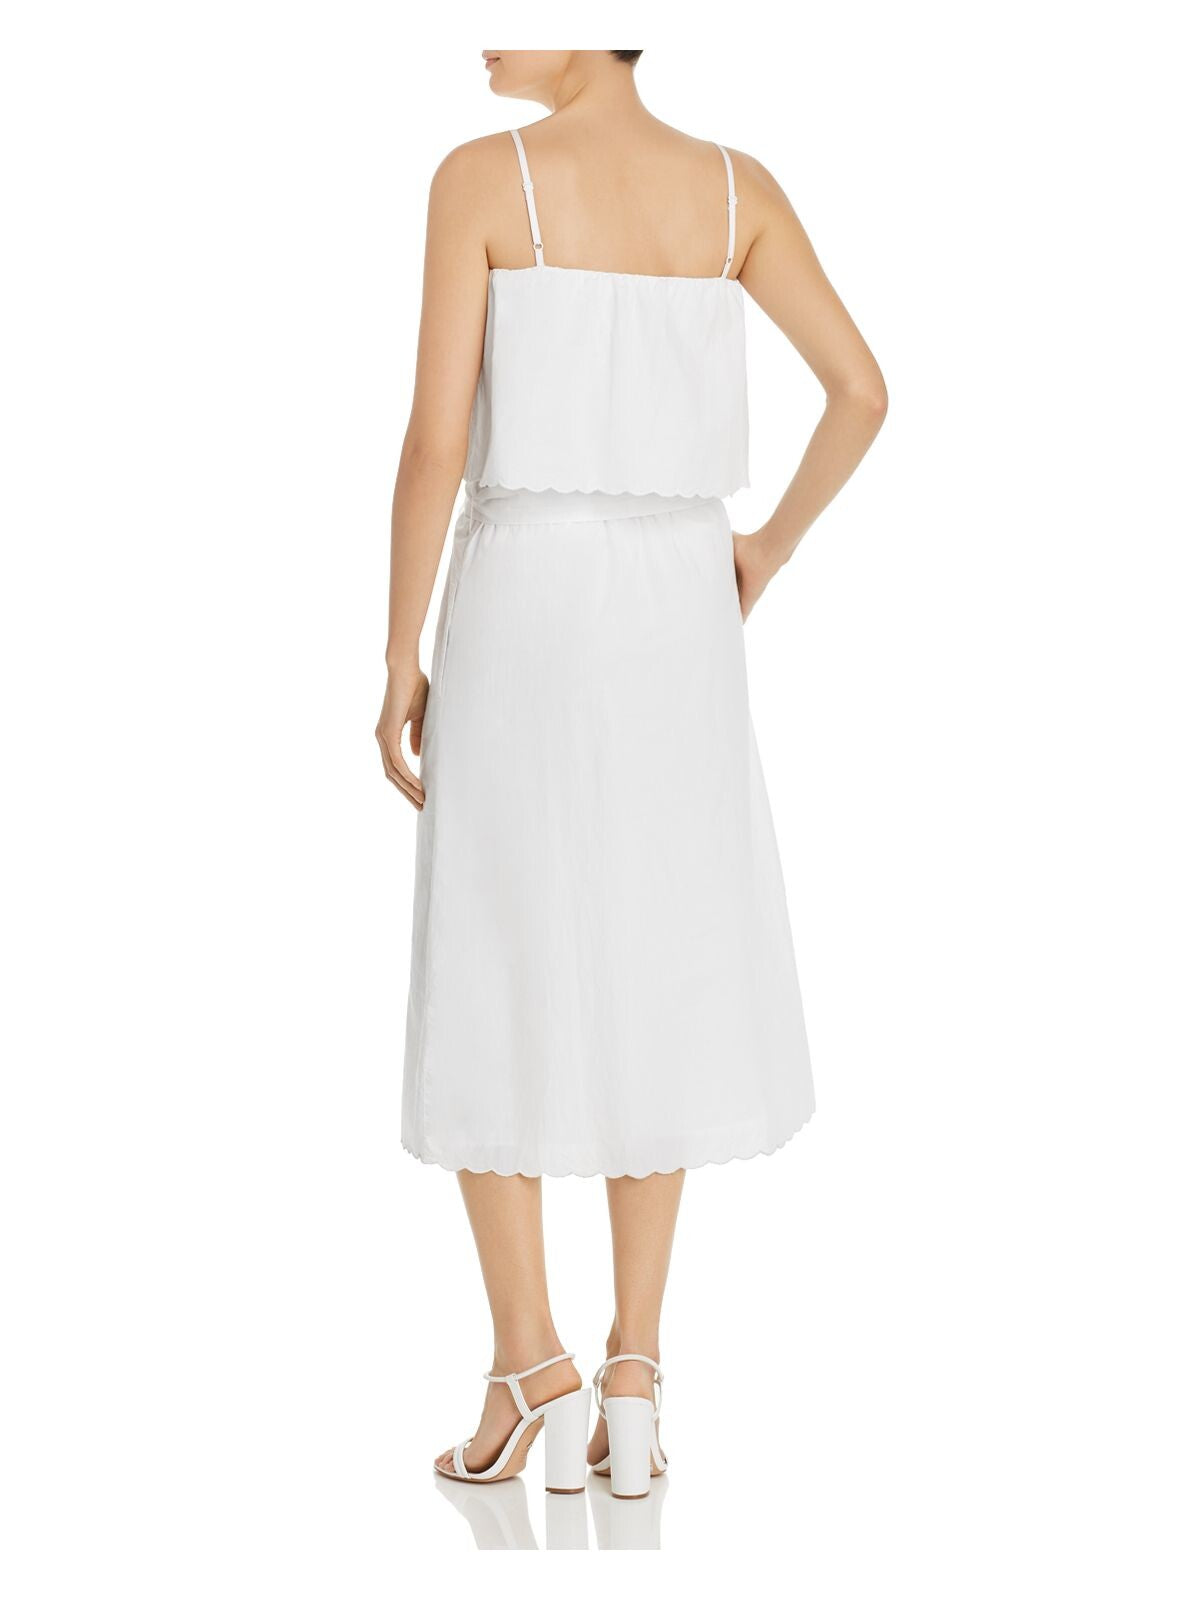 JOIE Womens White Cotton Ruffled Tie Front Scalloped Spaghetti Strap Midi Blouson Dress M